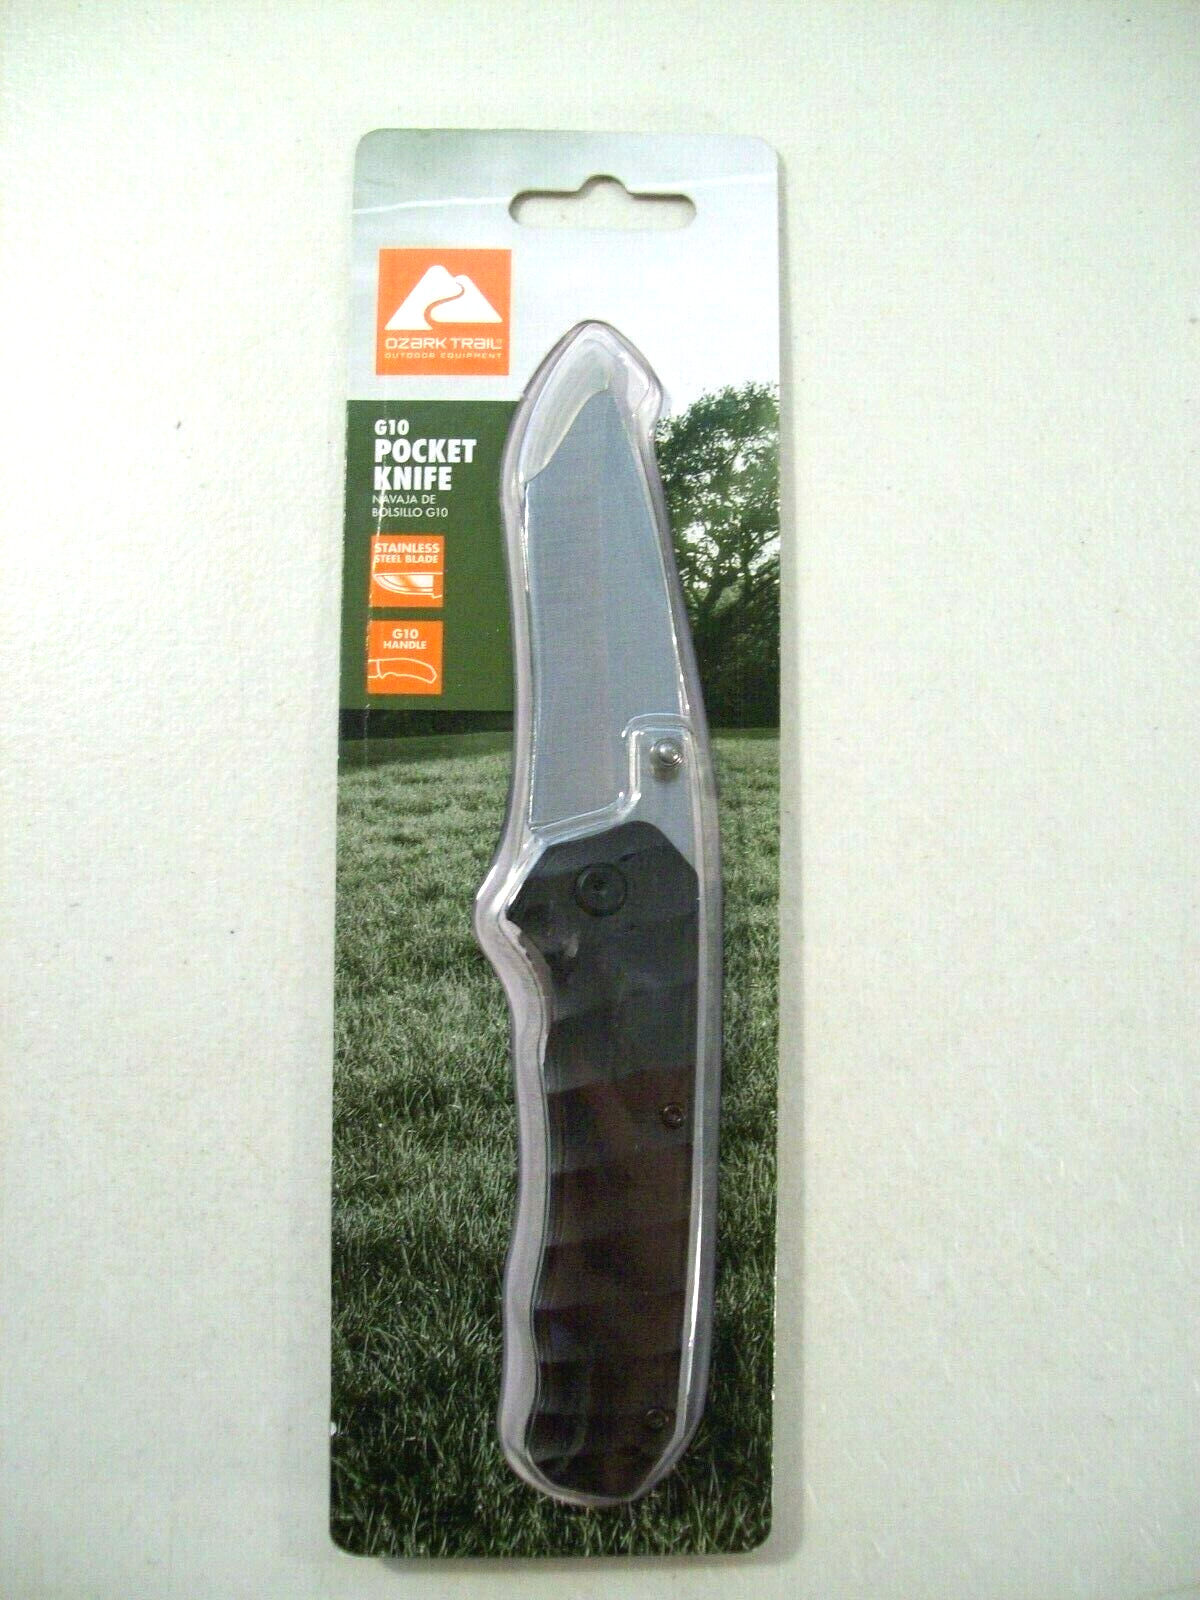 New Ozark Trail G10 Pocket Knife, Black, Pocket Clip